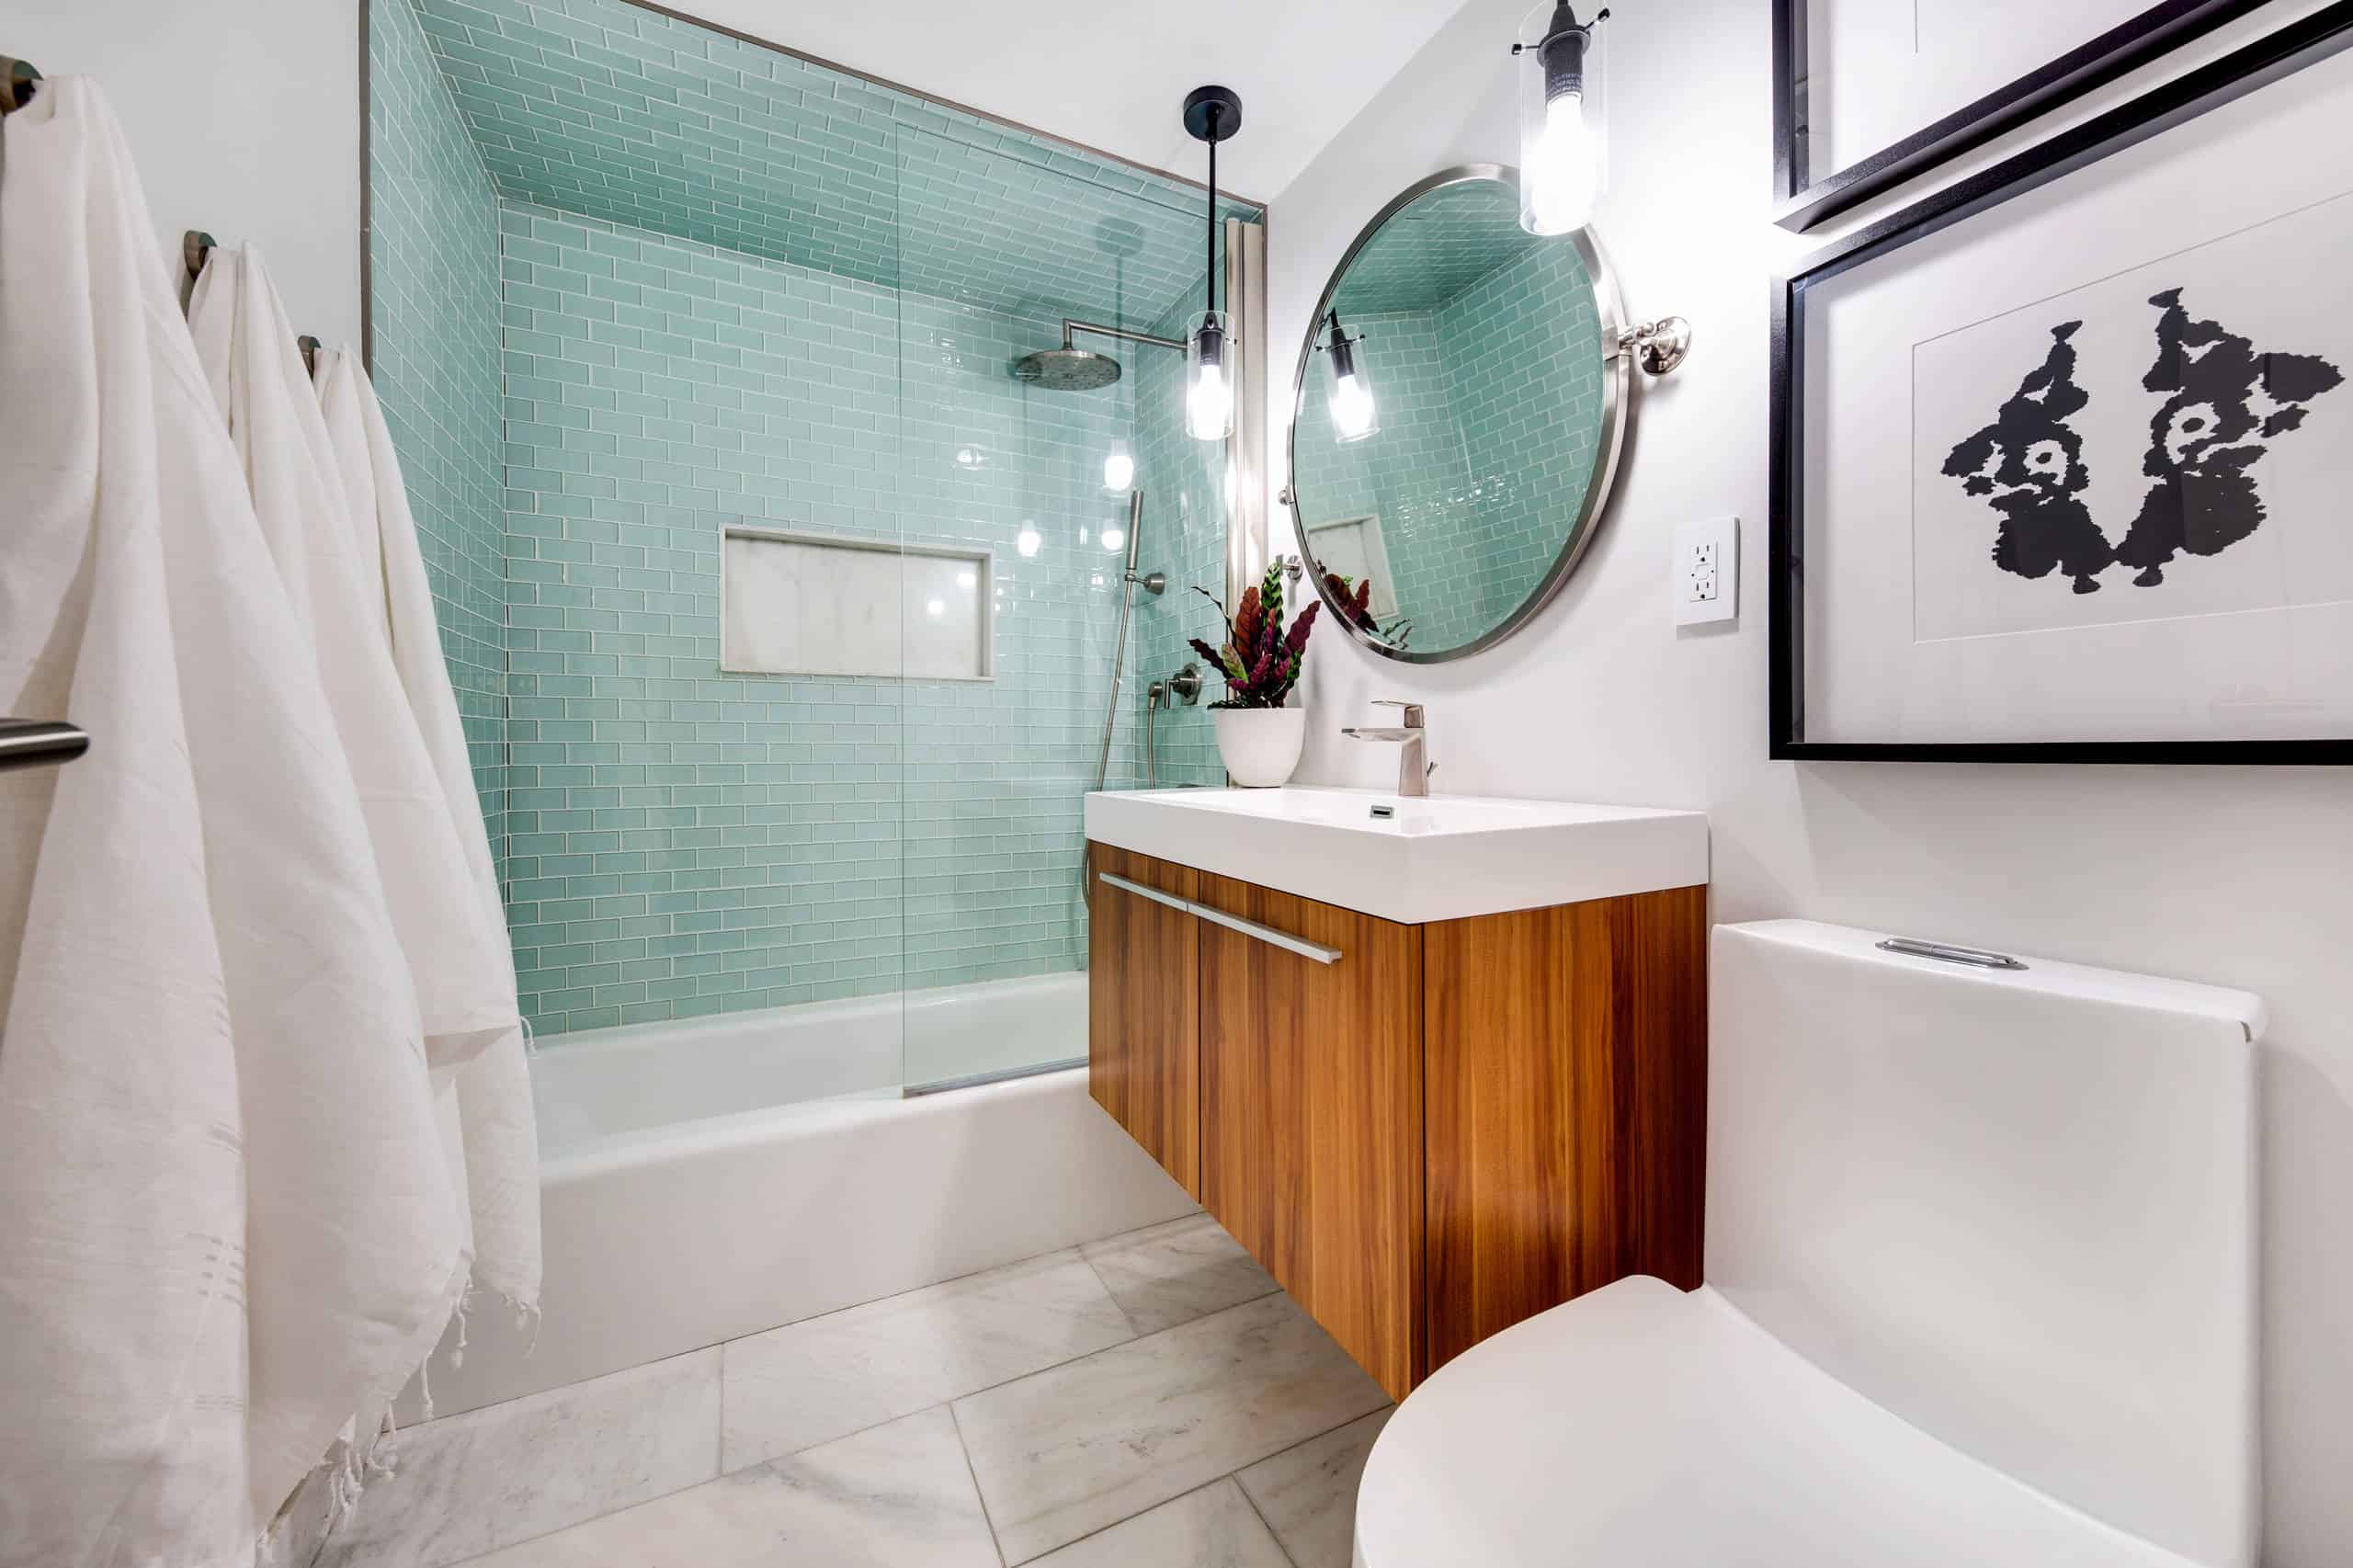 28 Small Bathroom Ideas With Bathtubs For 2022 - Small Bathroom Designs With Bathtub And Shower